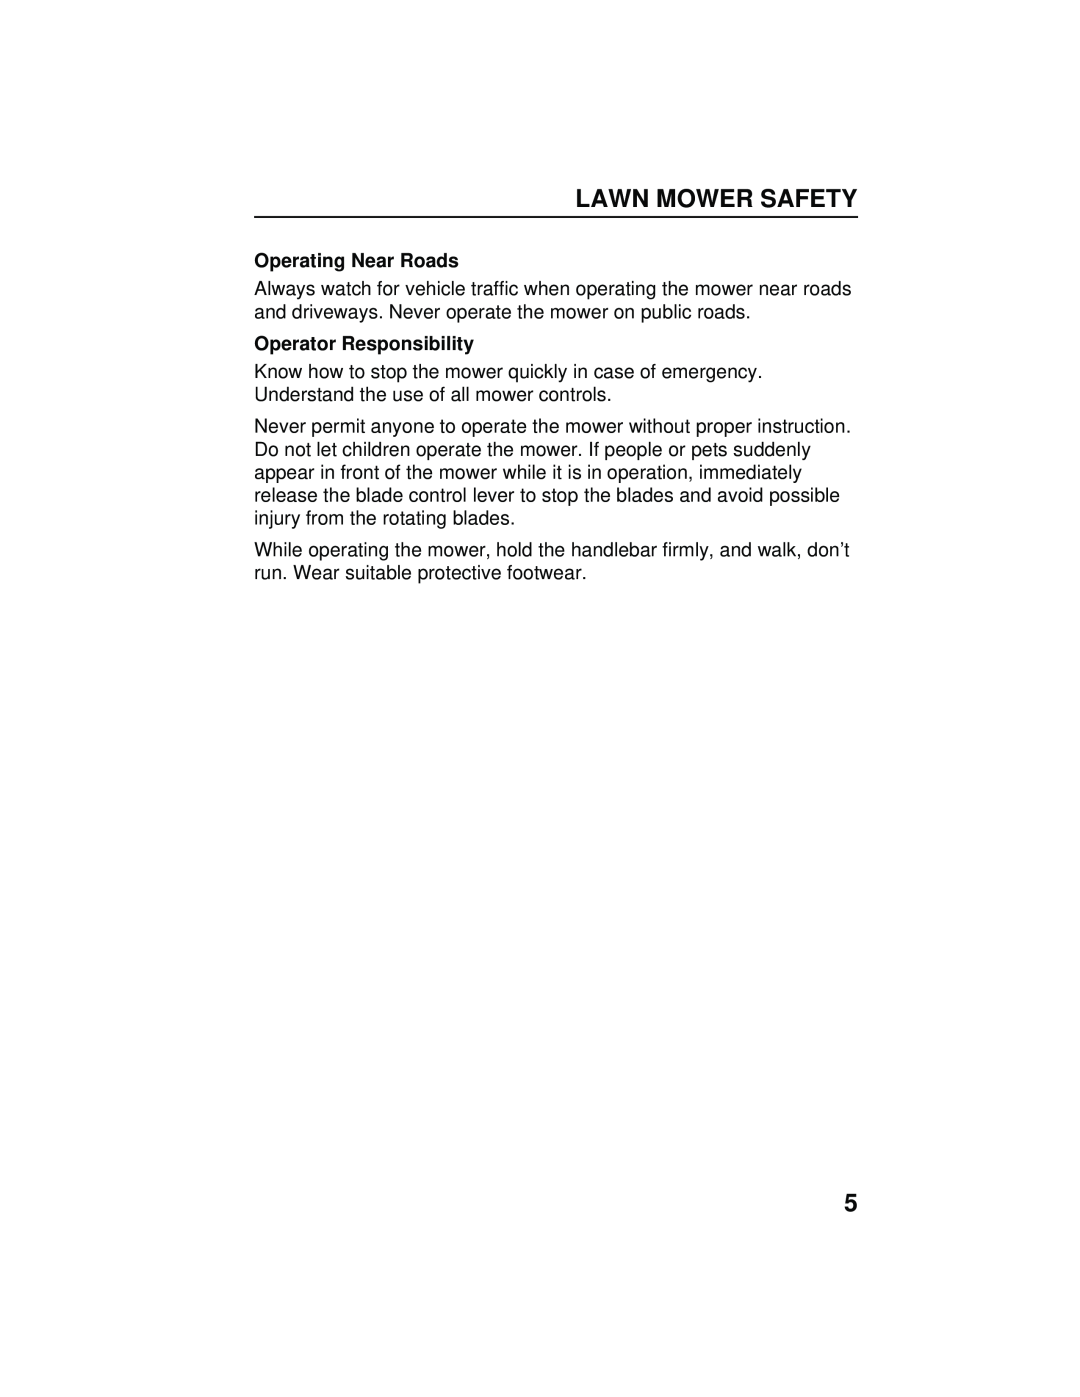 Honda Power Equipment HRB216TXA owner manual Lawn Mower Safety, Operating Near Roads, Operator Responsibility 